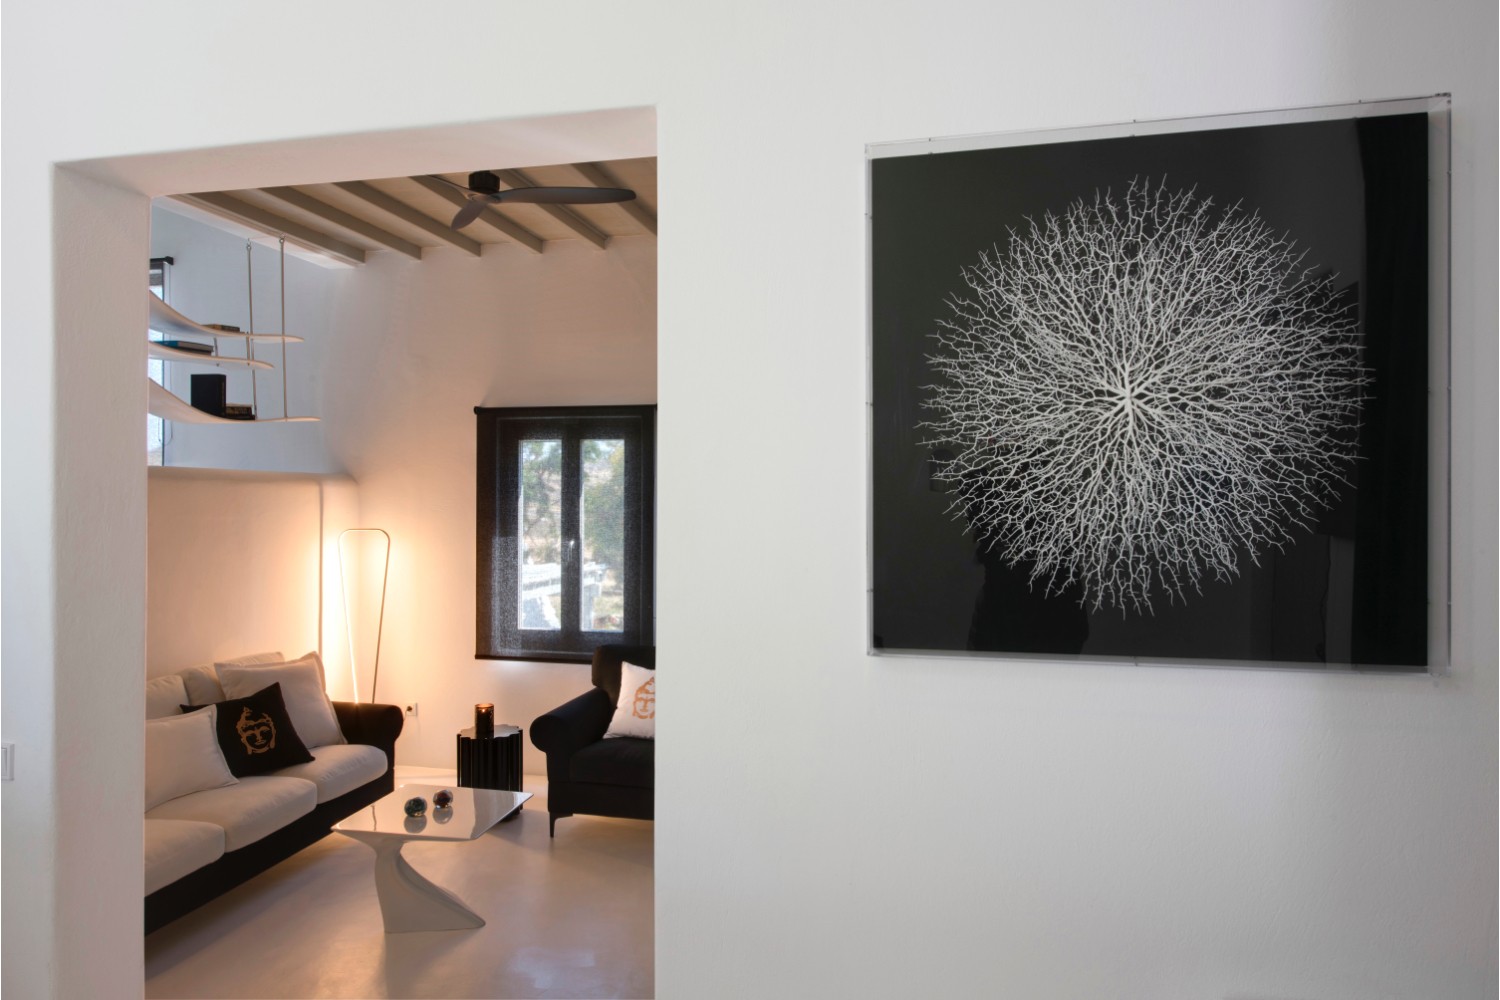 Amalgam Homes Dafni villa, Mykonos island: image interior gallery